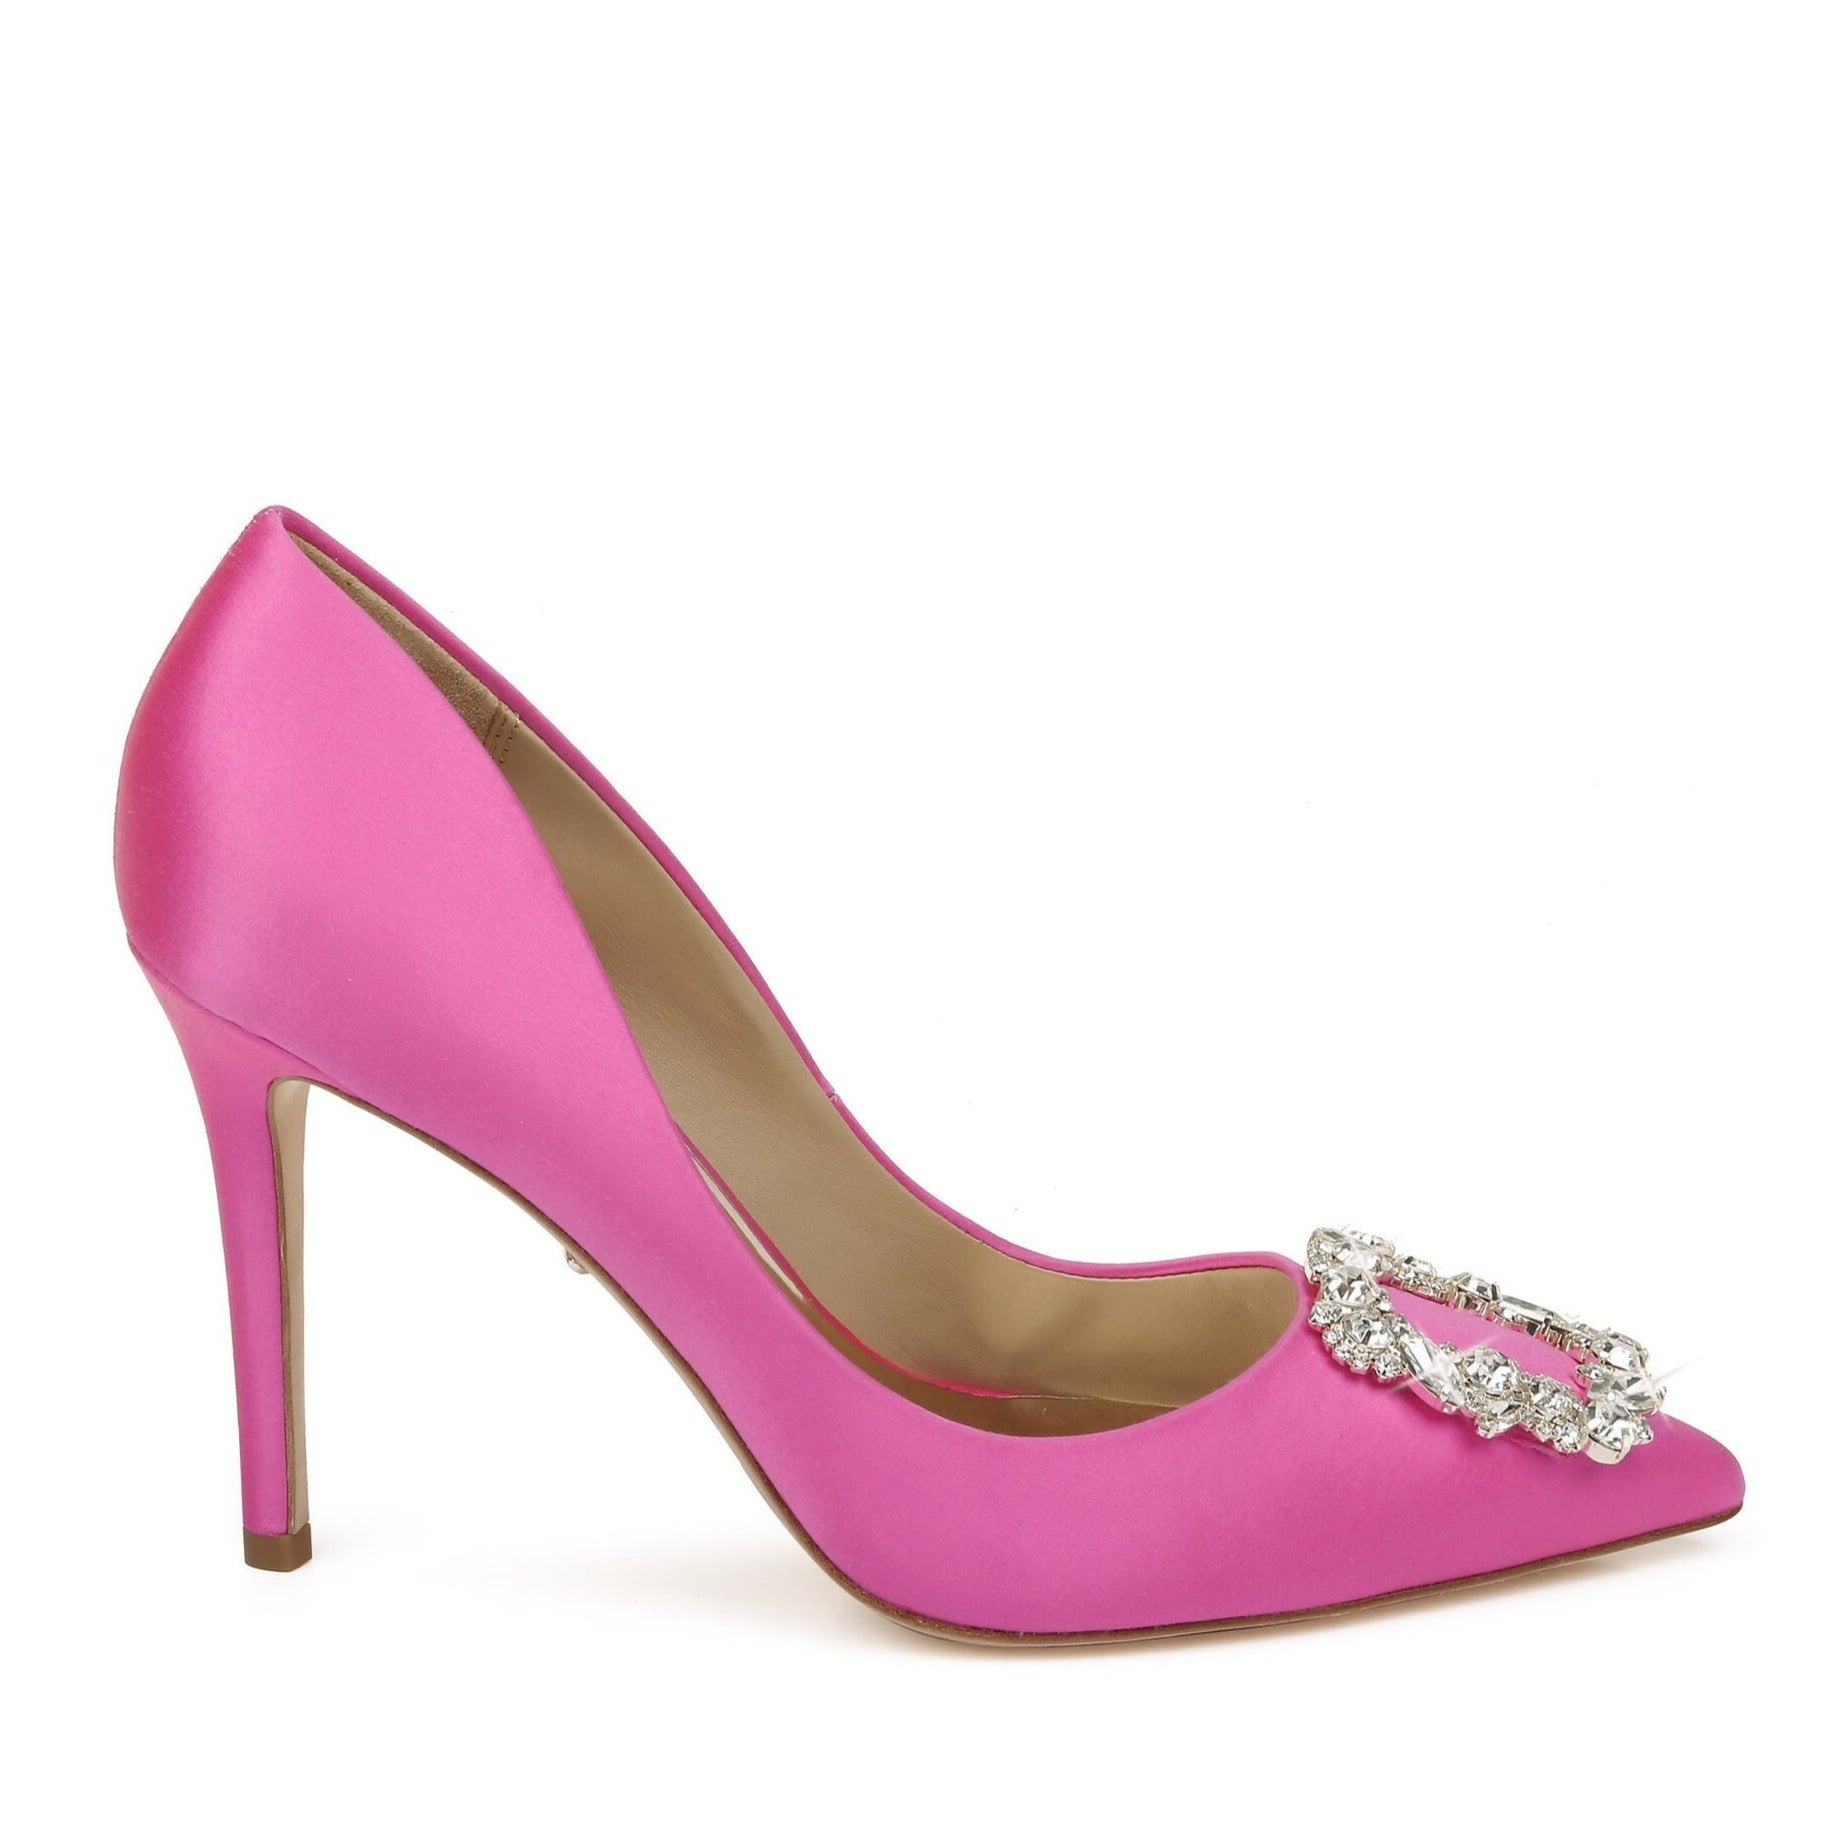 Badgley Mischka Cher Buckle Pointed Wedding Shoes - Pink